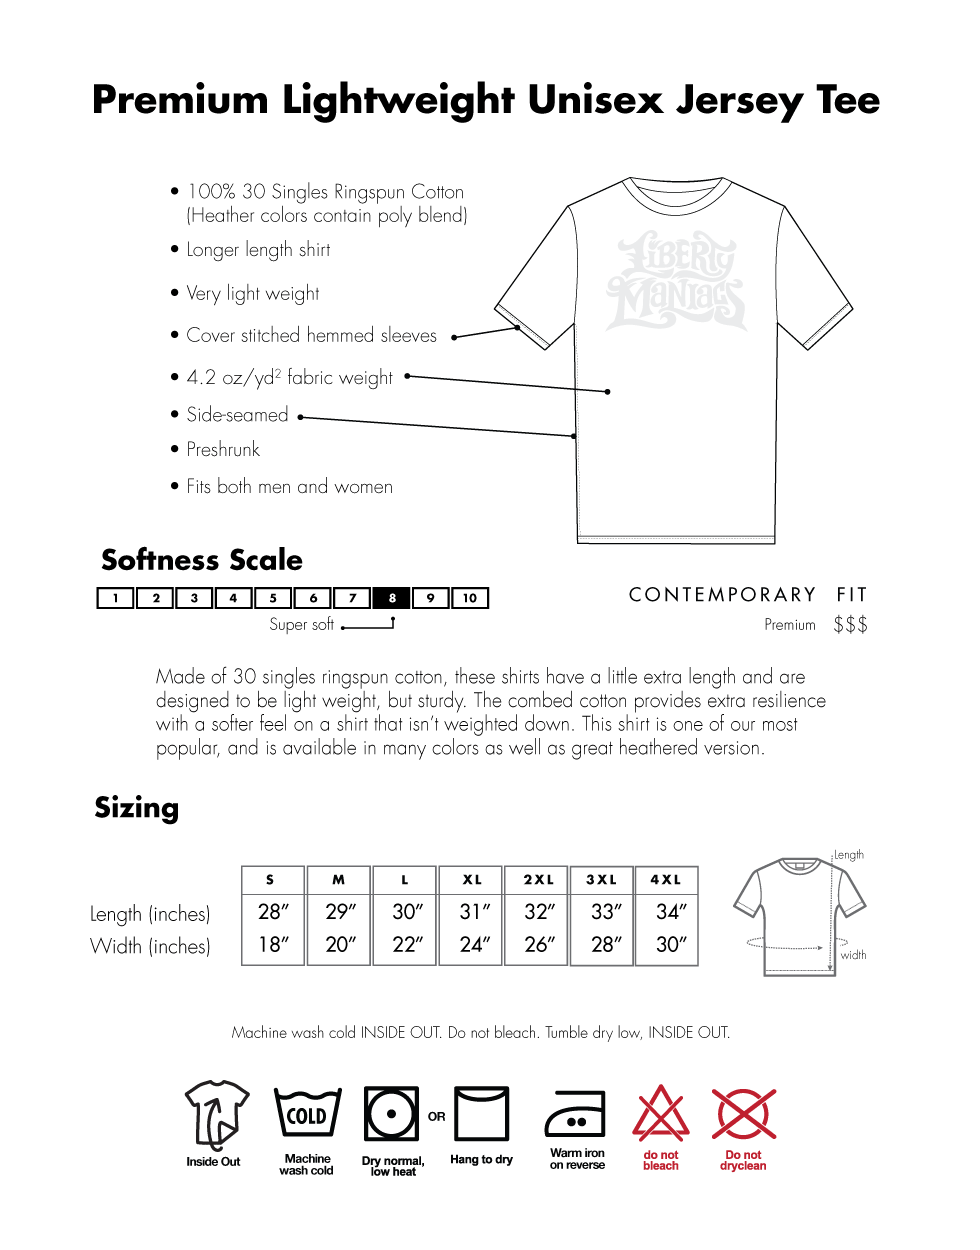 Government Emergency Short-Sleeve Unisex T-Shirt